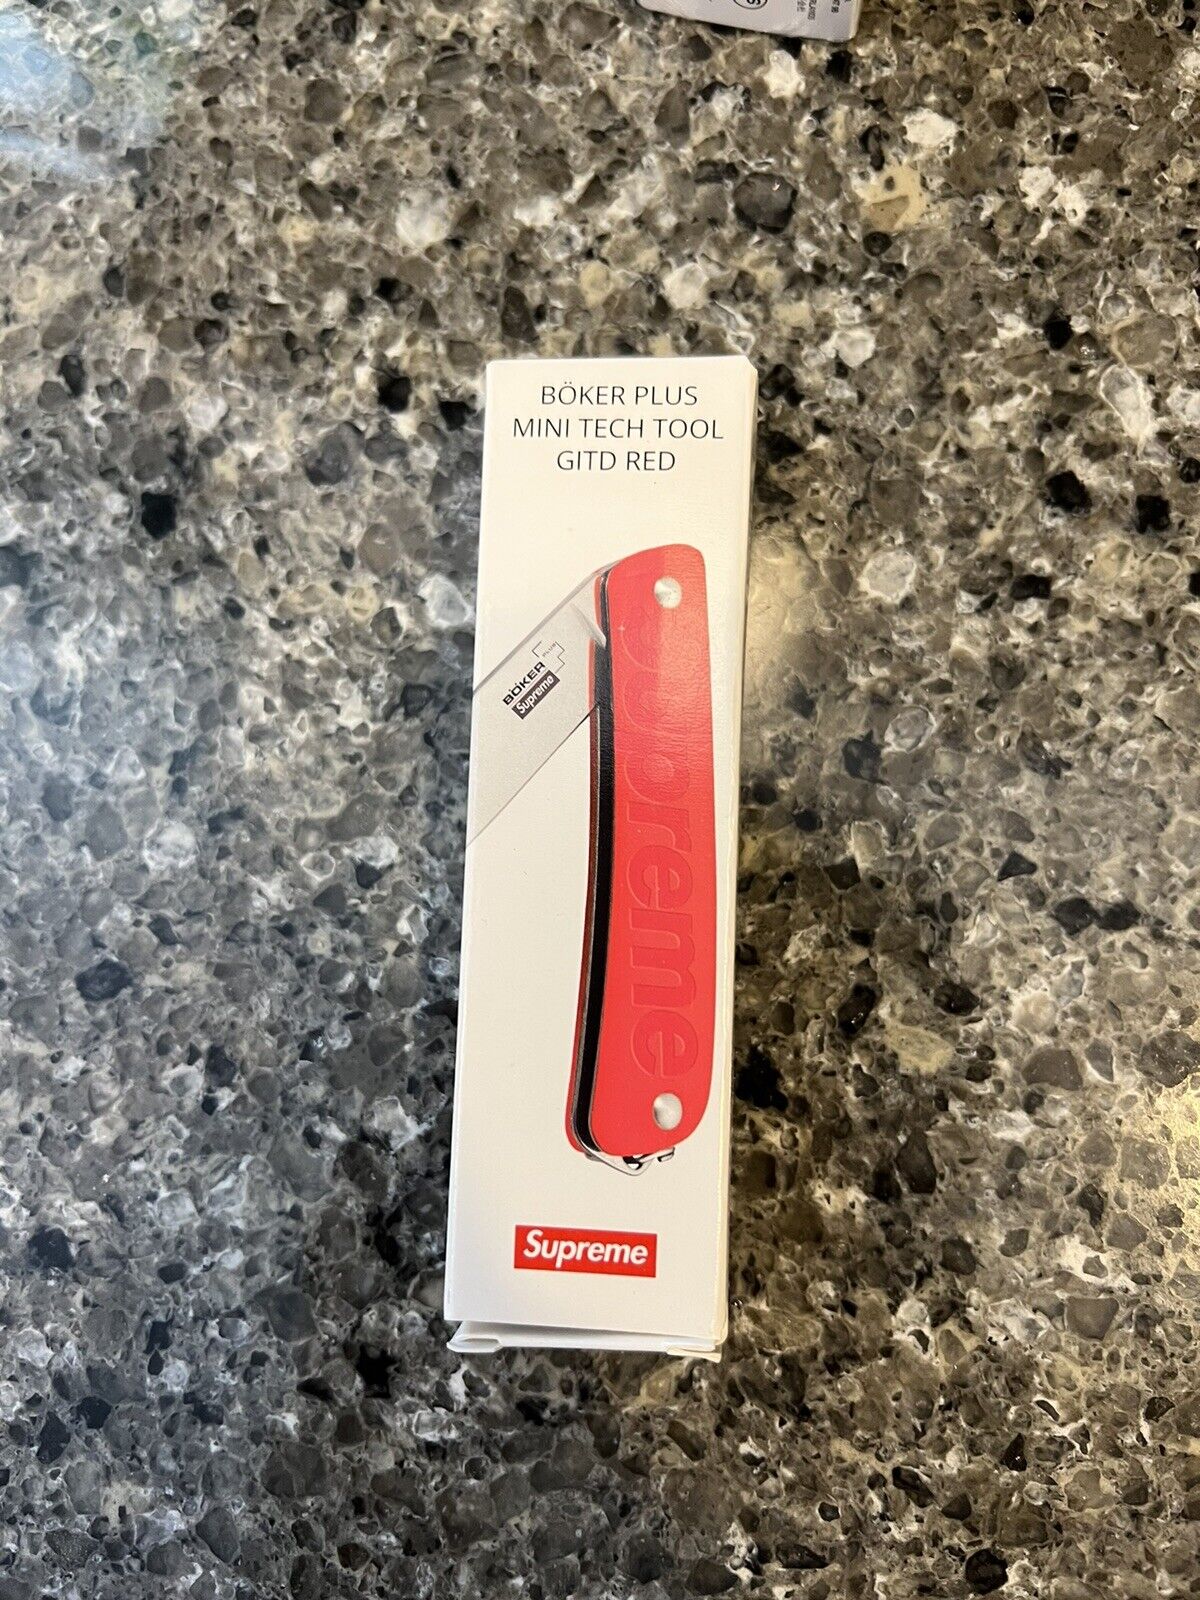 Supreme/Boker Glow-In-The-Dark Keychain Knife - Red